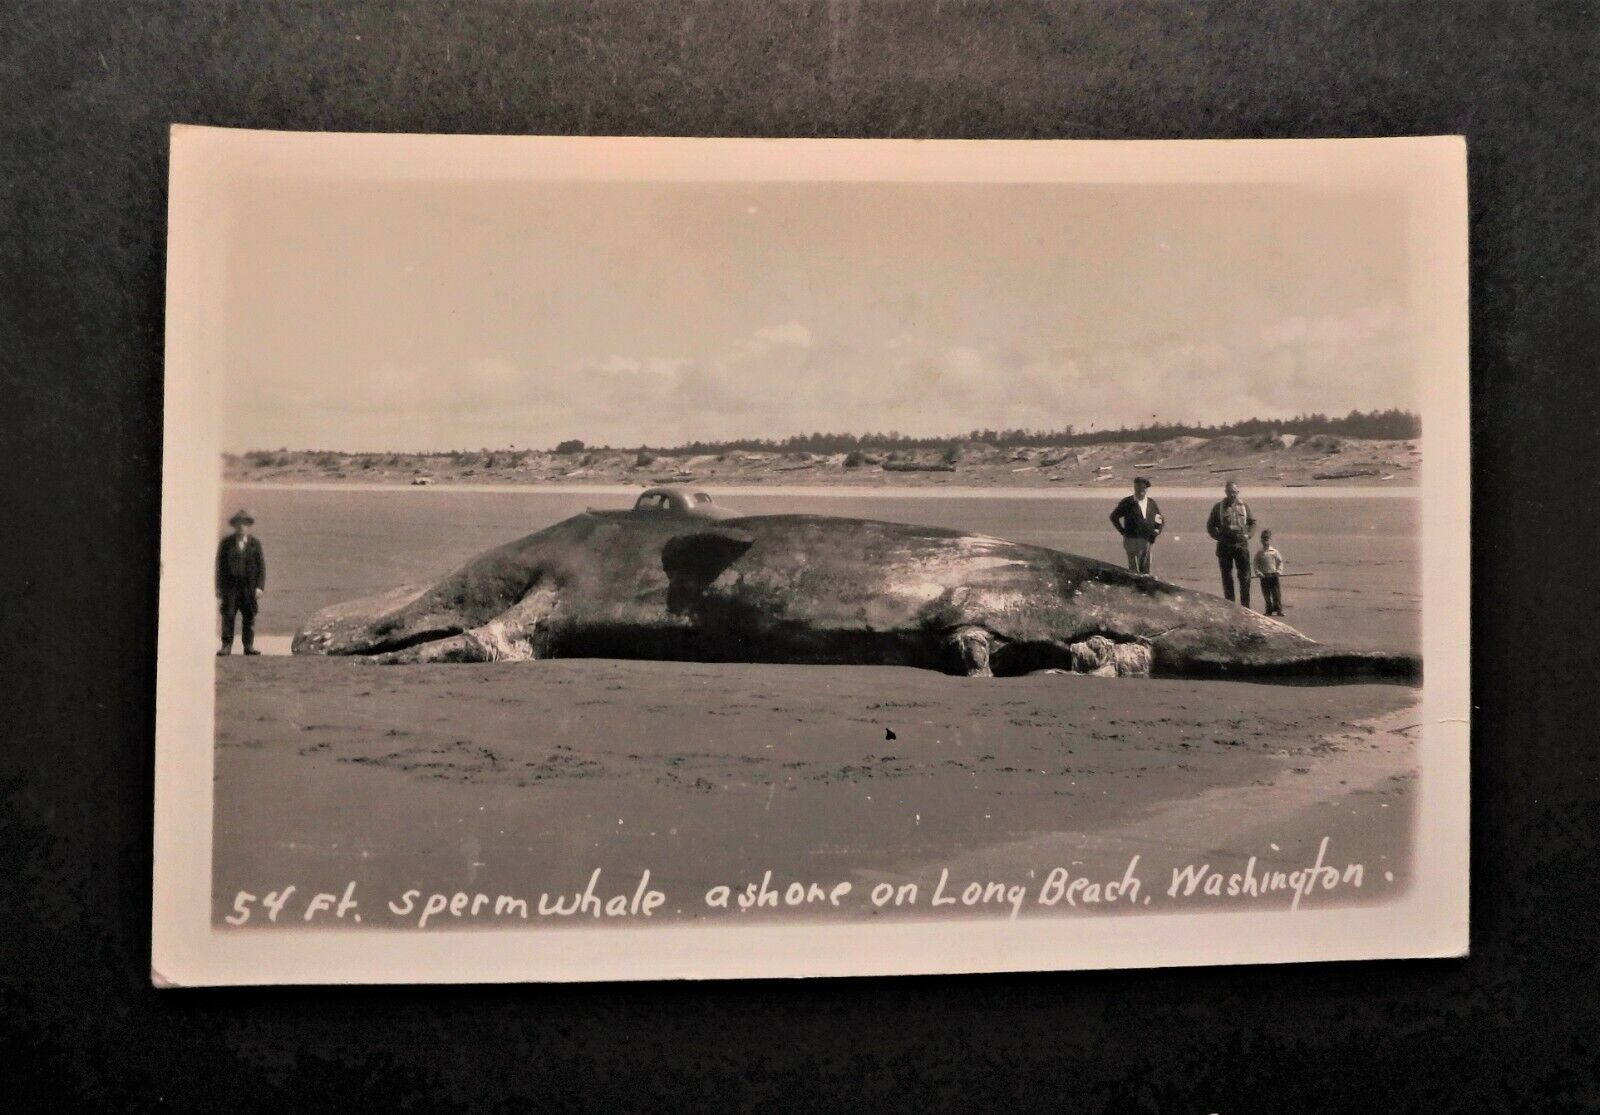 Old Photo Postcard: Beached Sperm Whale at Long Beach Washington - 54 Feet Long